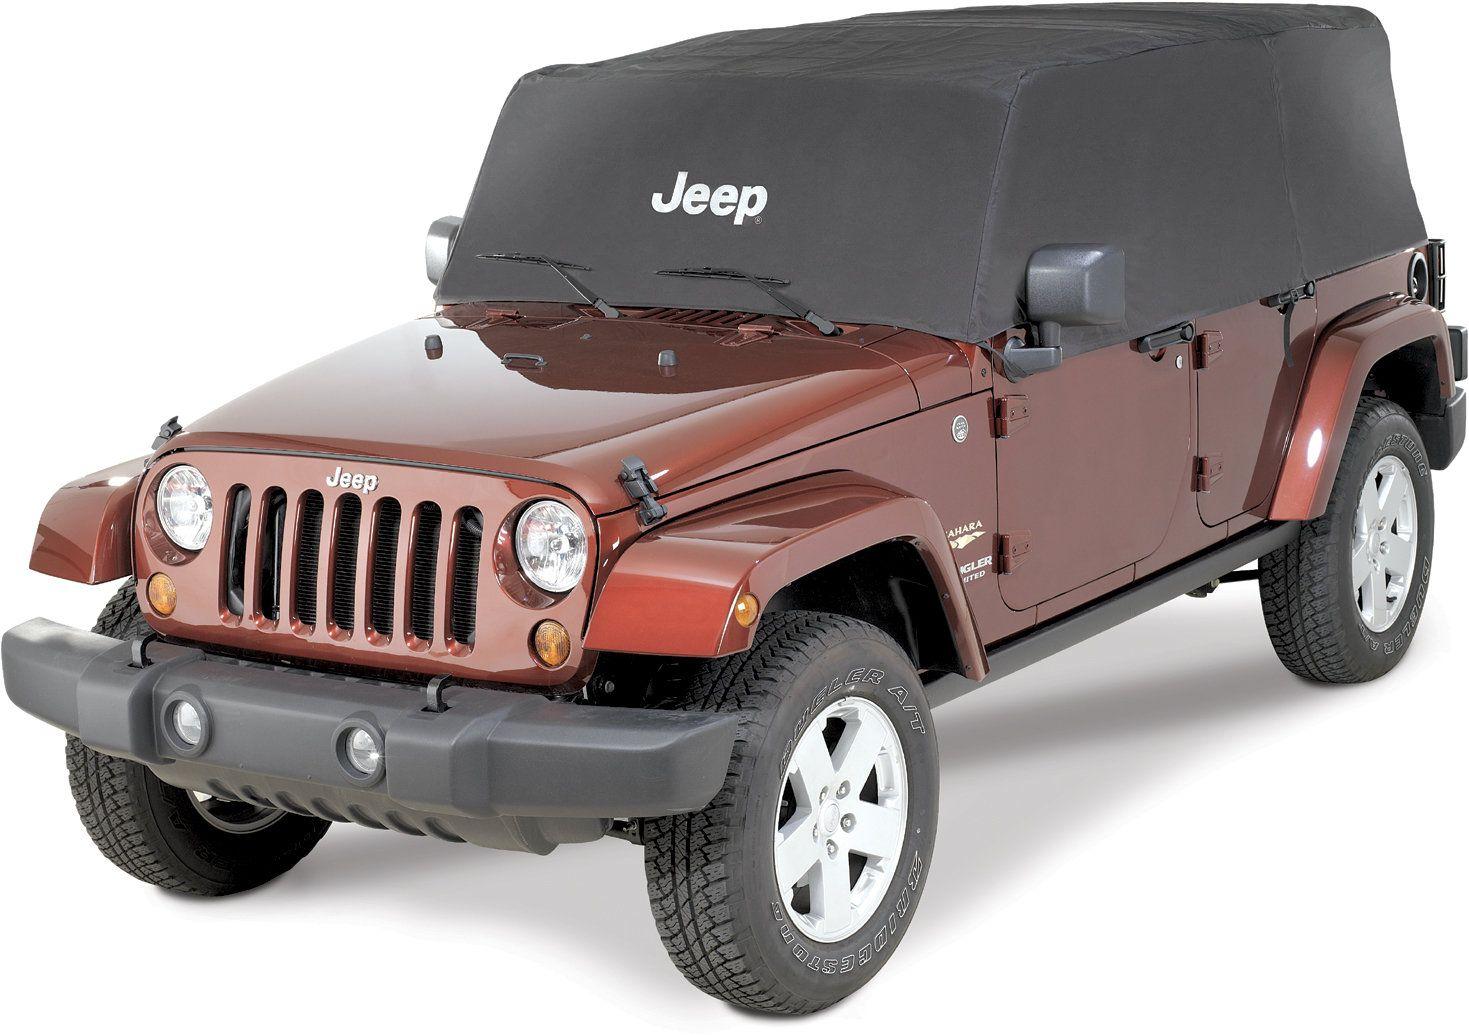 Jeep Unlimited Logo - Mopar Jeep Logo Cab Cover for 07-18 Jeep Wrangler Unlimited JK 4 ...